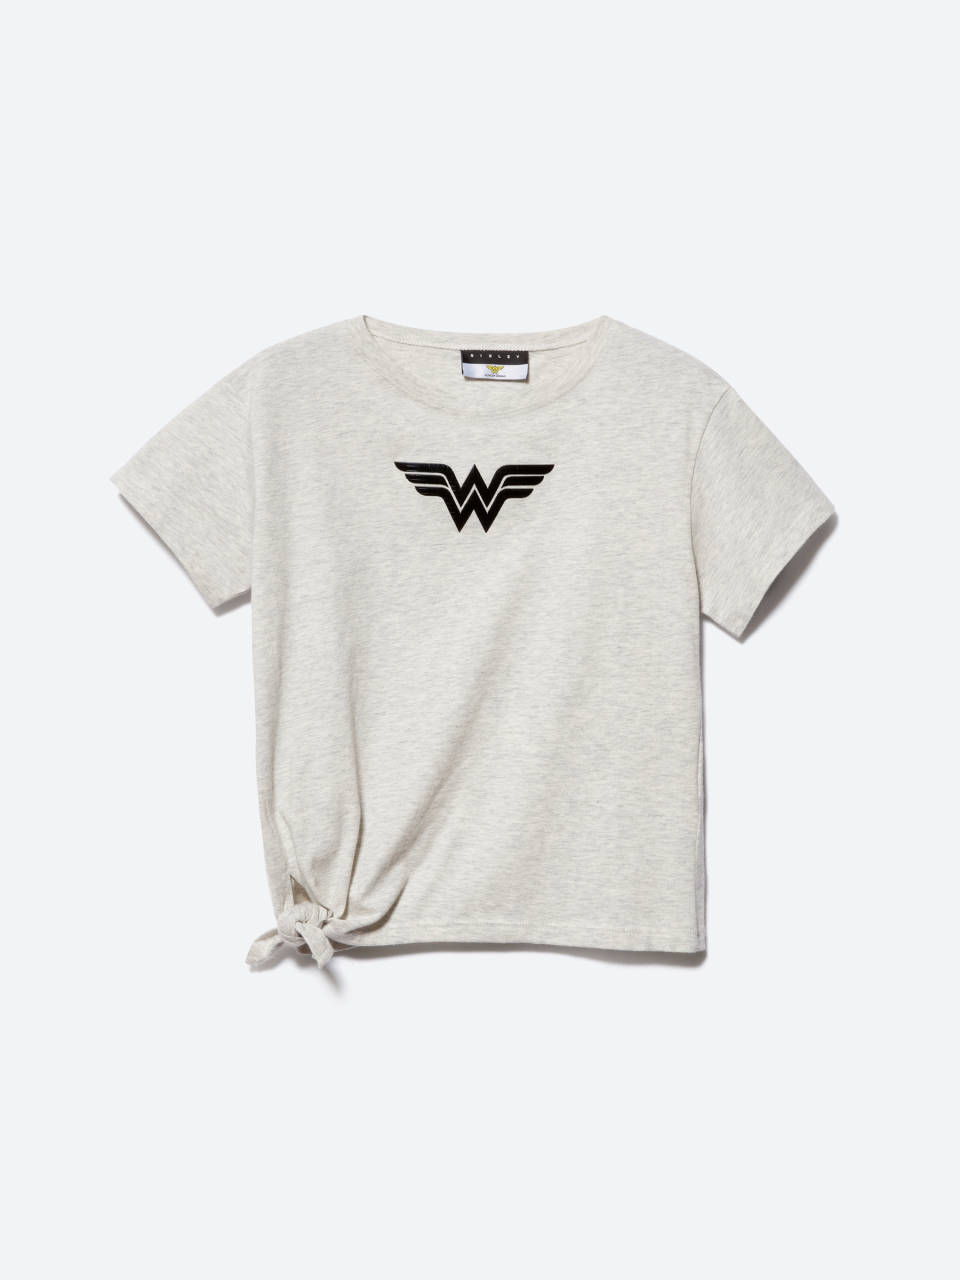 Wonder Woman FOR PRESIDENT Comic Cover BOYS & GIRLS T-Shirt S-XL 